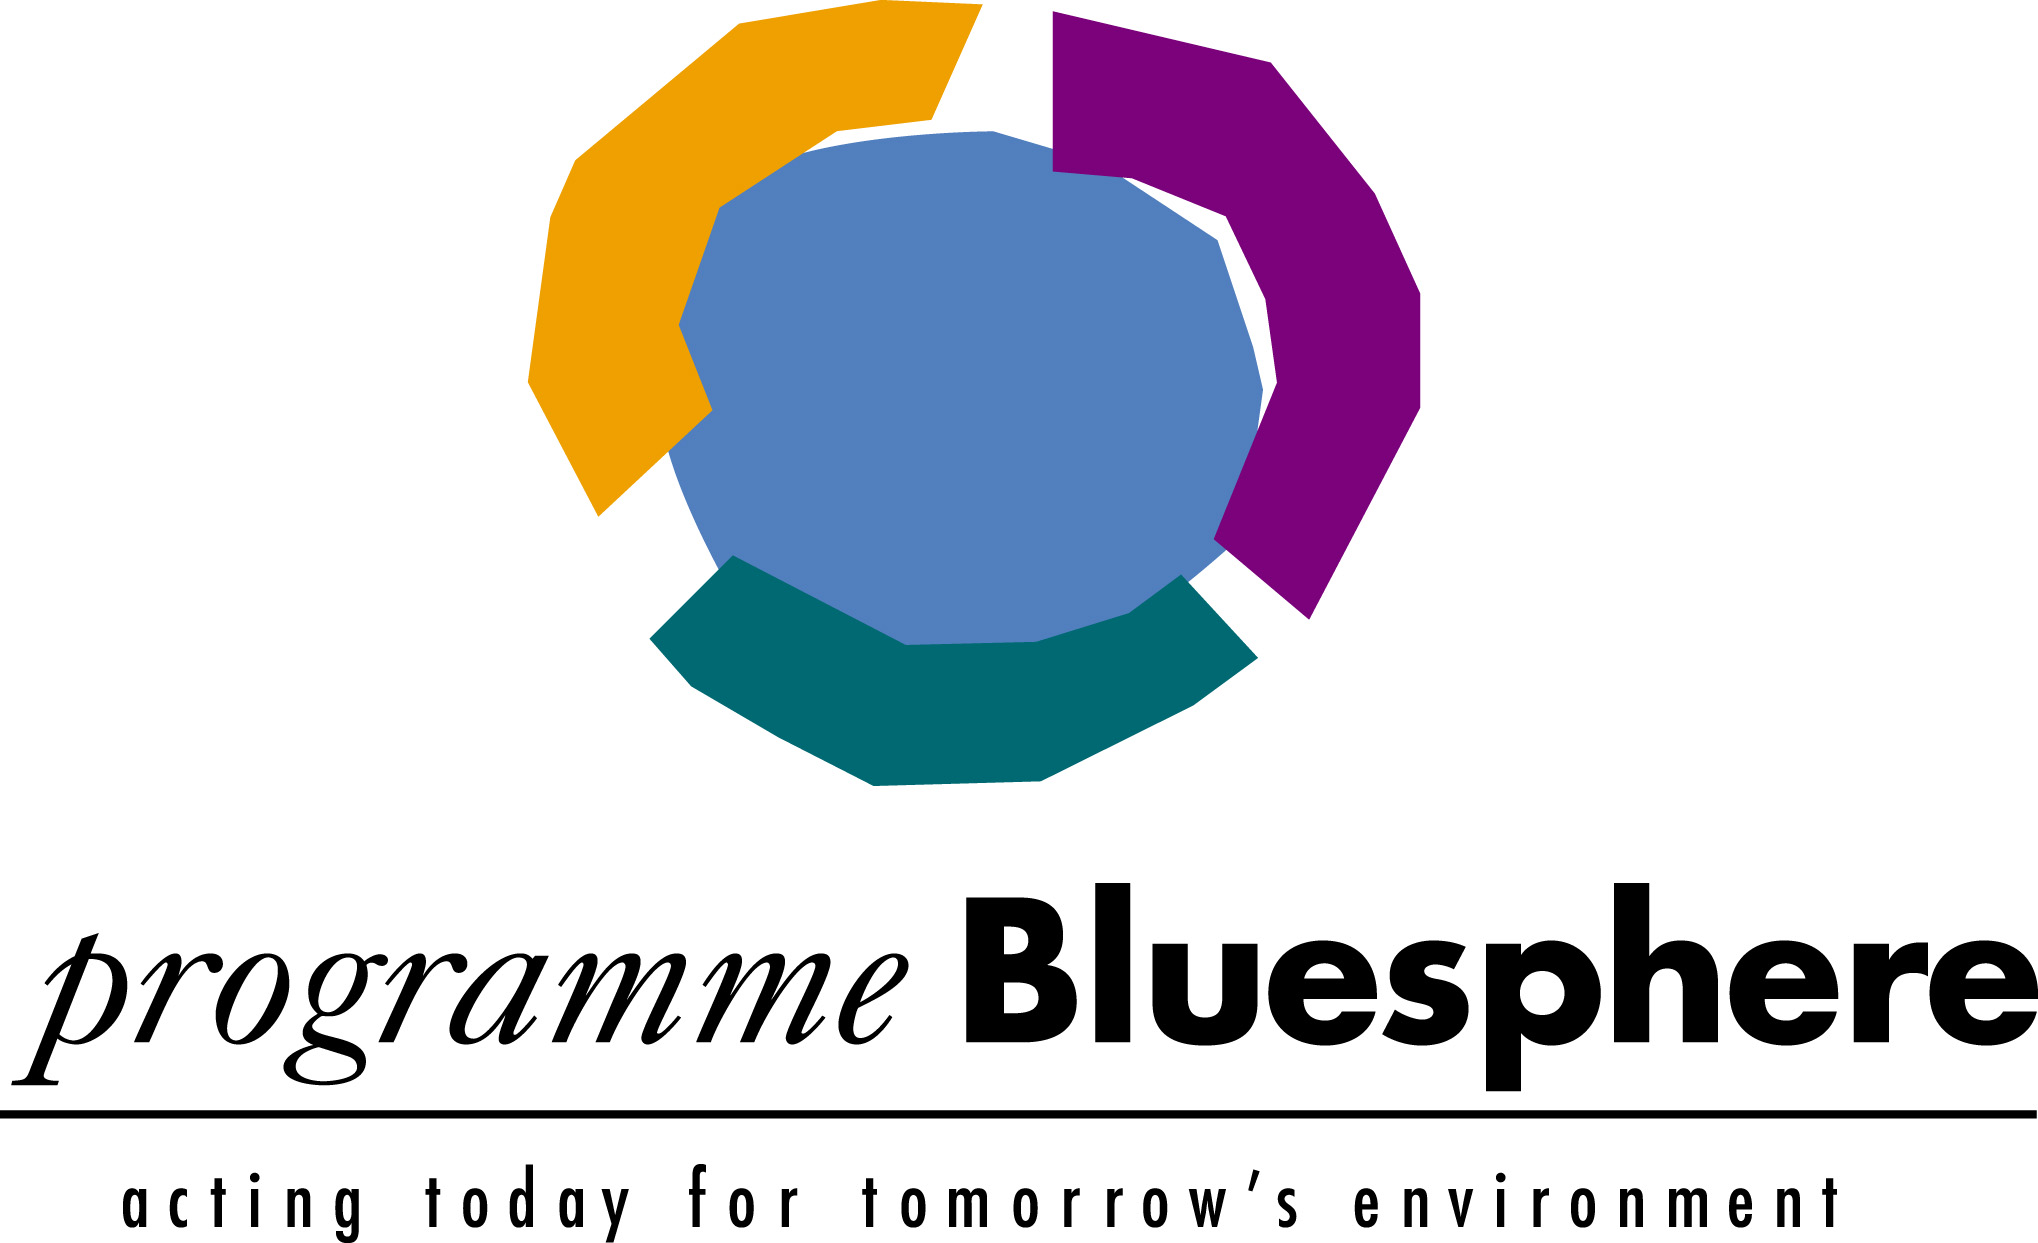 BLS bluesphere logo w:type.jpg